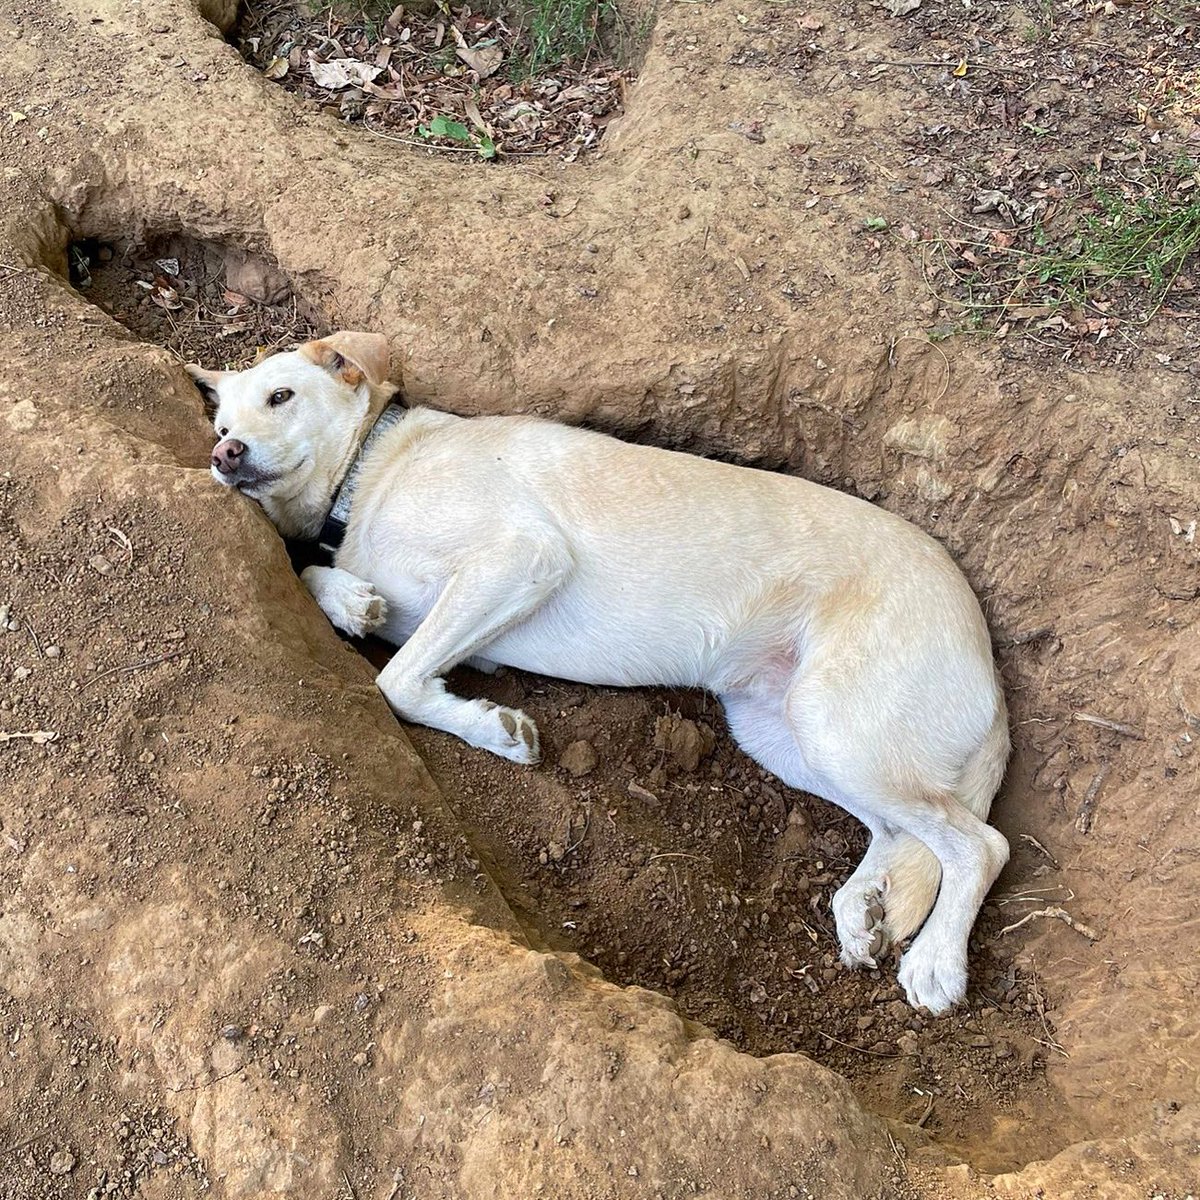 Penny in her carefully dug penny-shaped hole 😭 

#dogshelter #rescuedogs #adoptdontshop #doglover #sancturydog